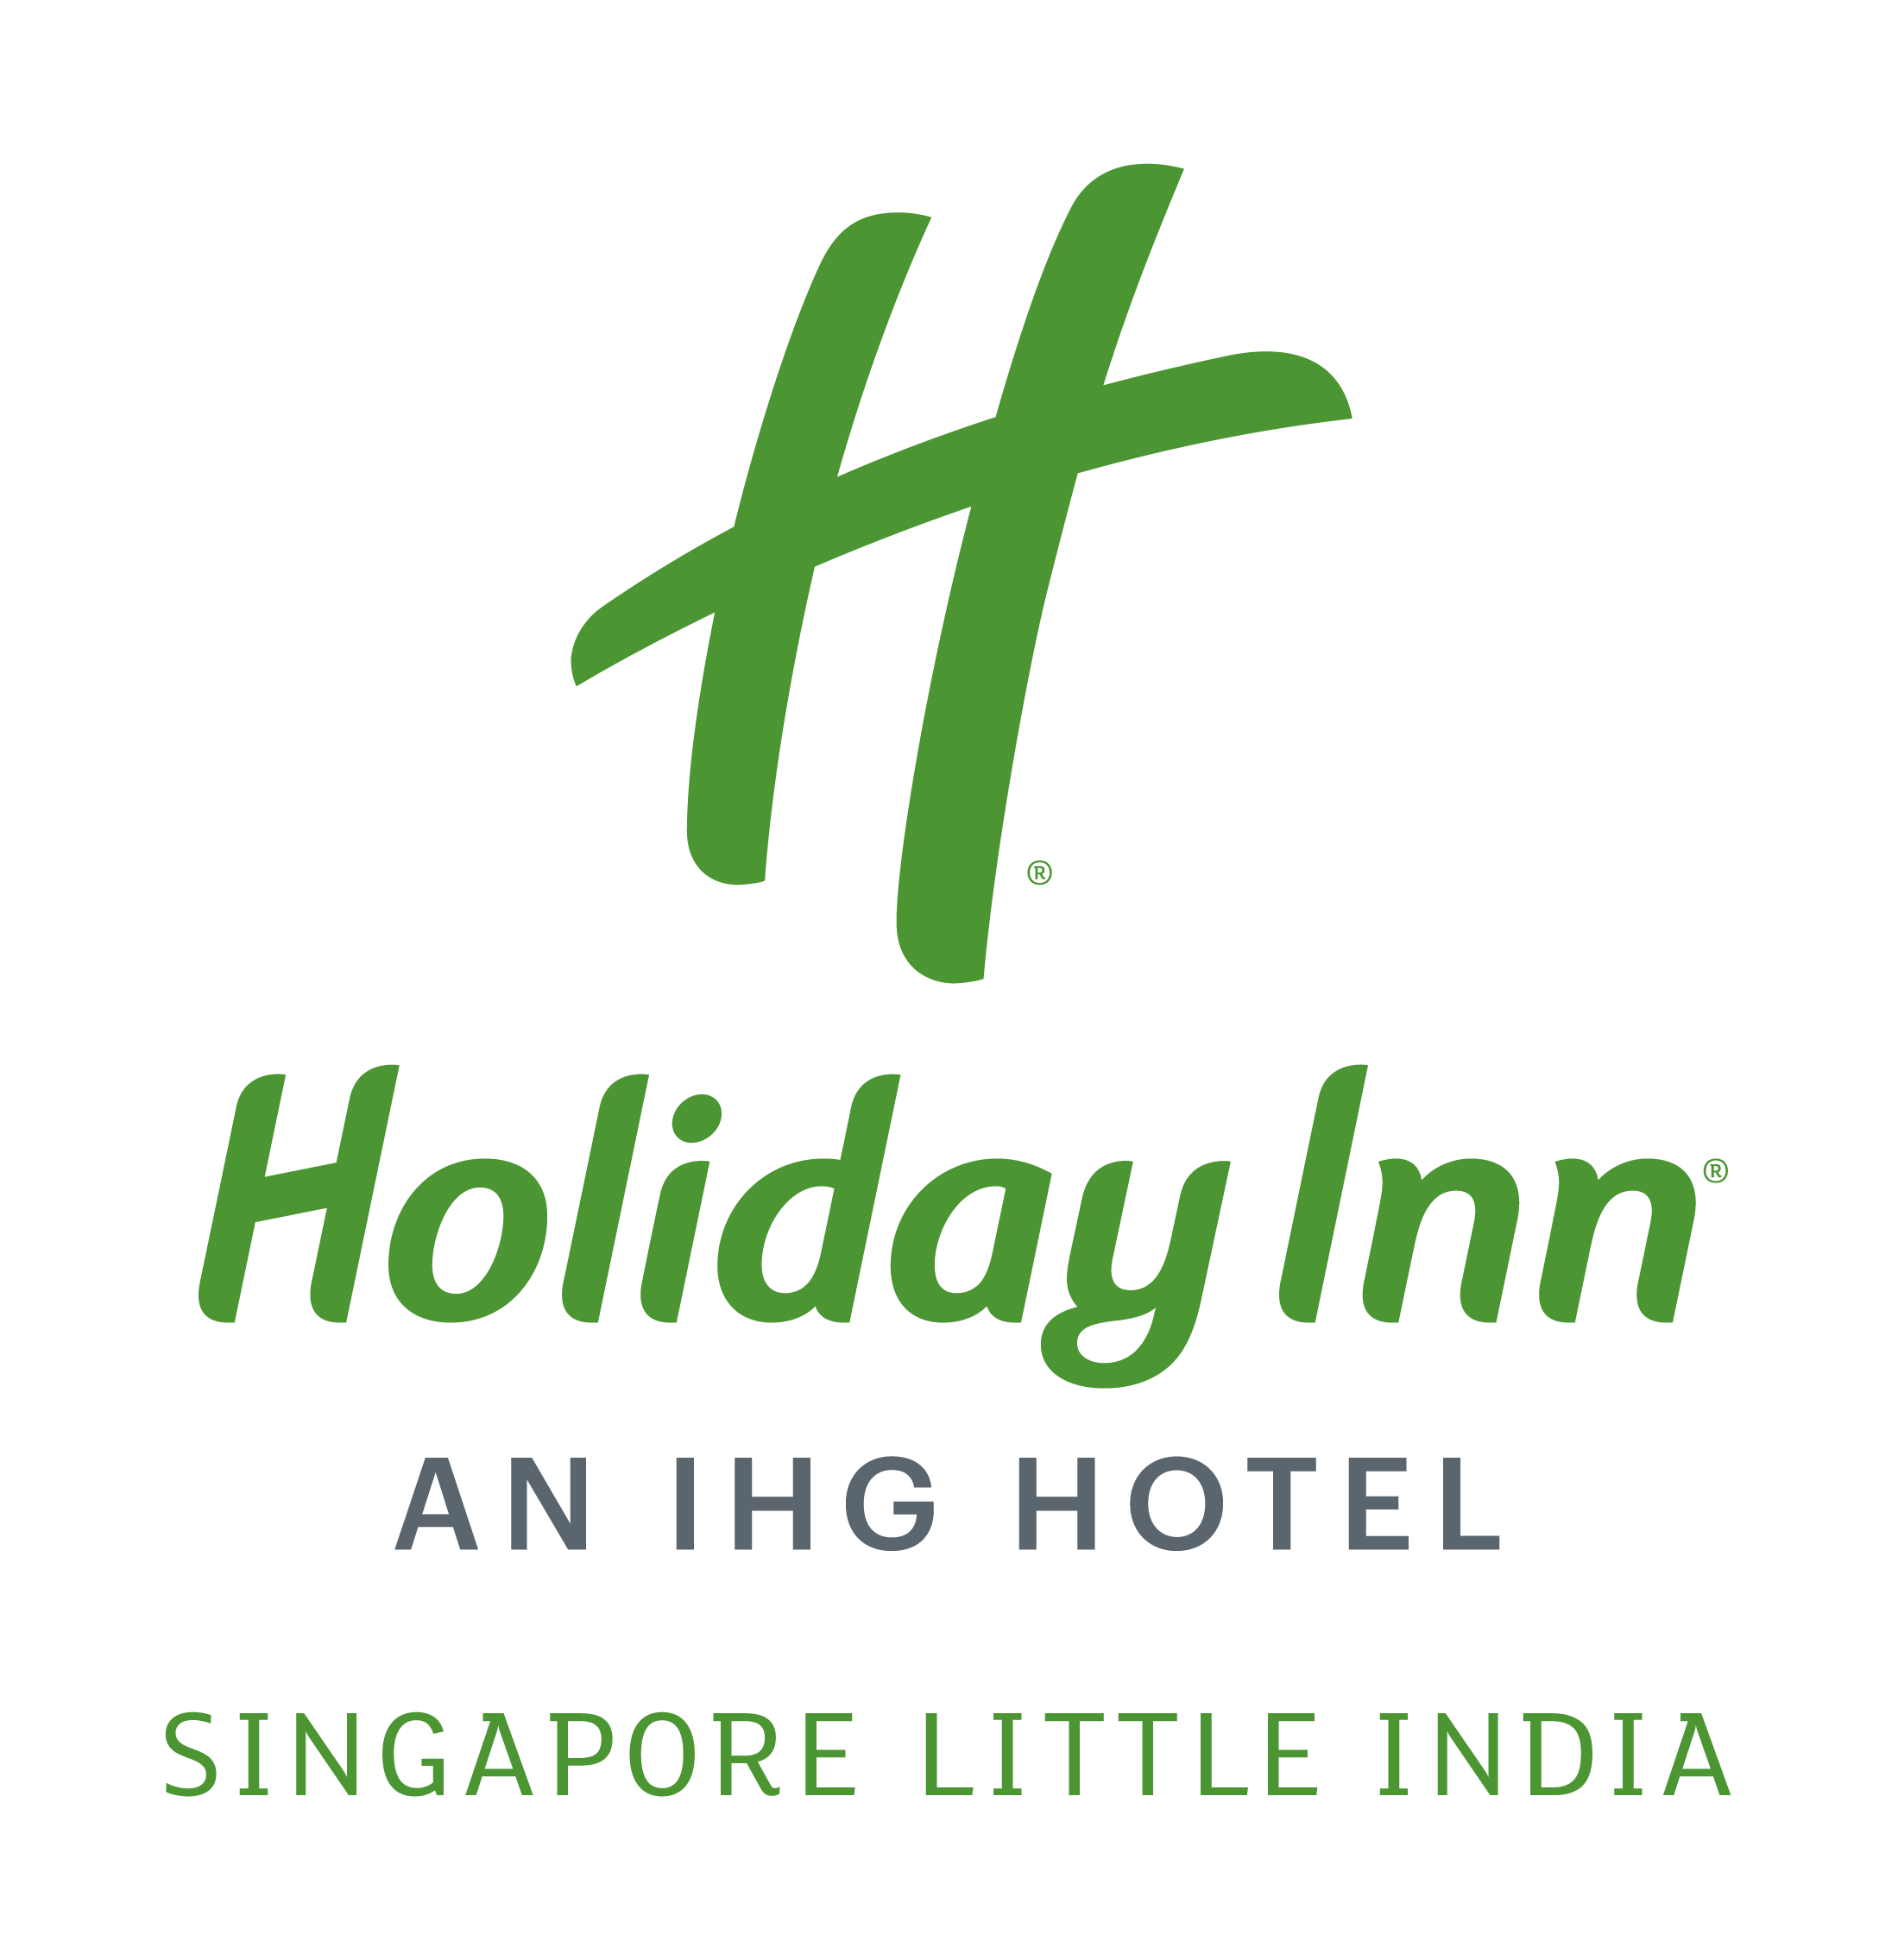 Holiday Inn Singapore Little India company logo